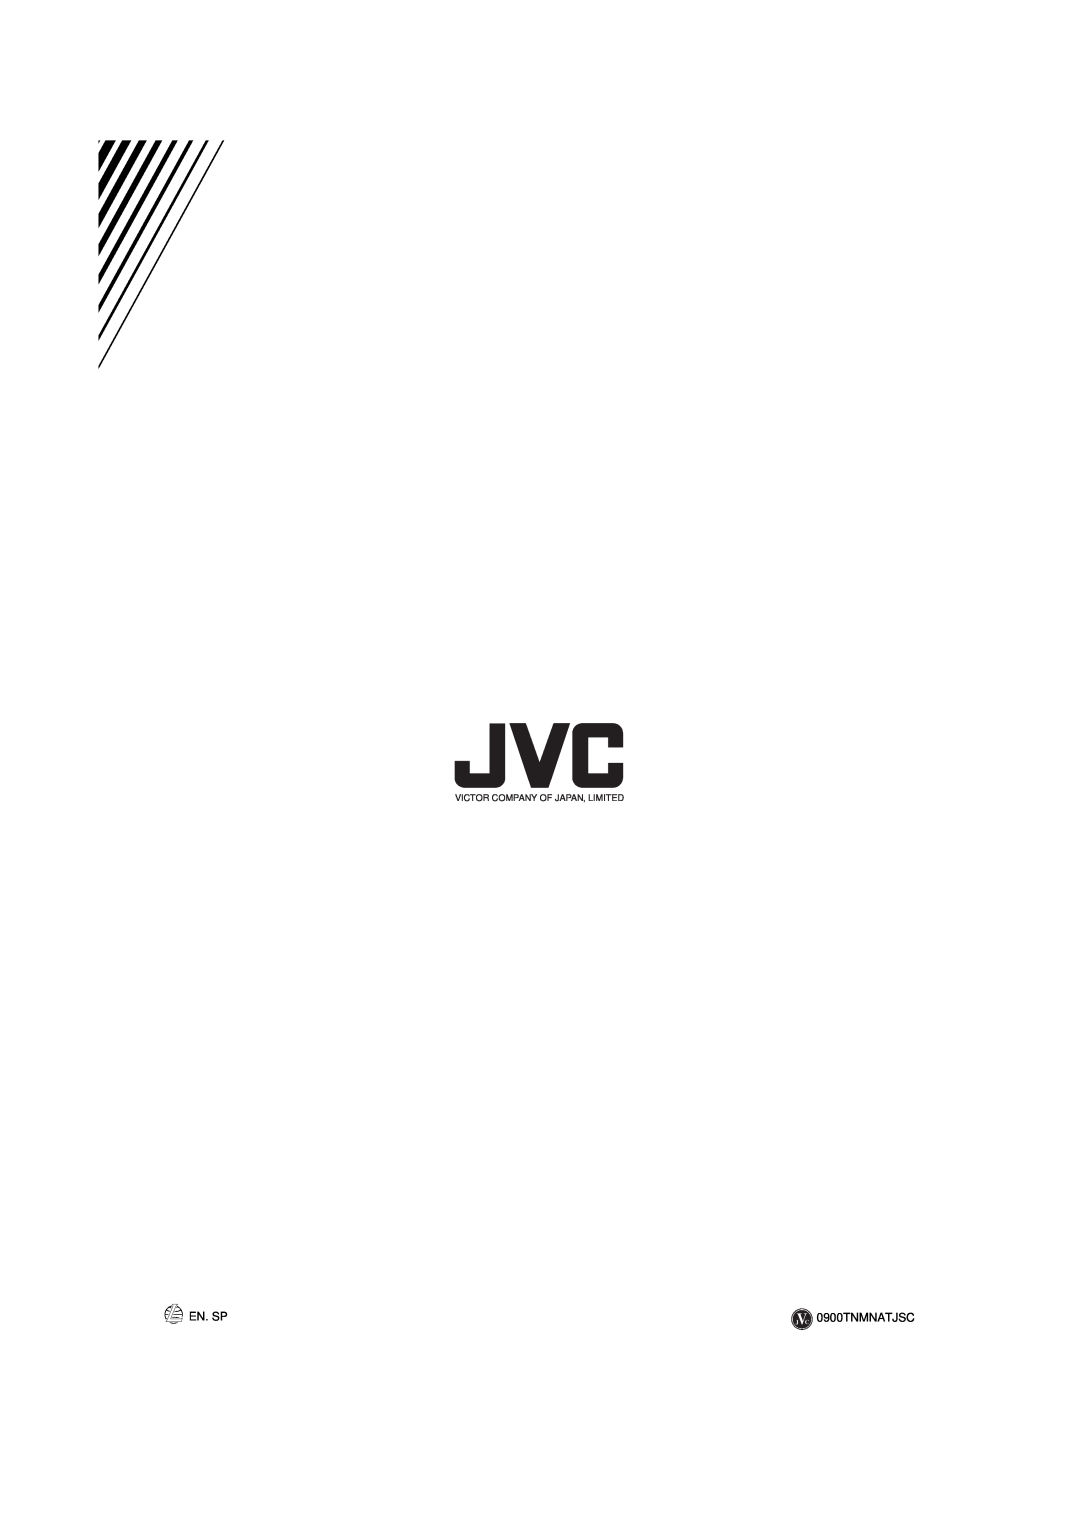 JVC TH-A104 manual En. Sp, 0900TNMNATJSC, Victor Company Of Japan, Limited 